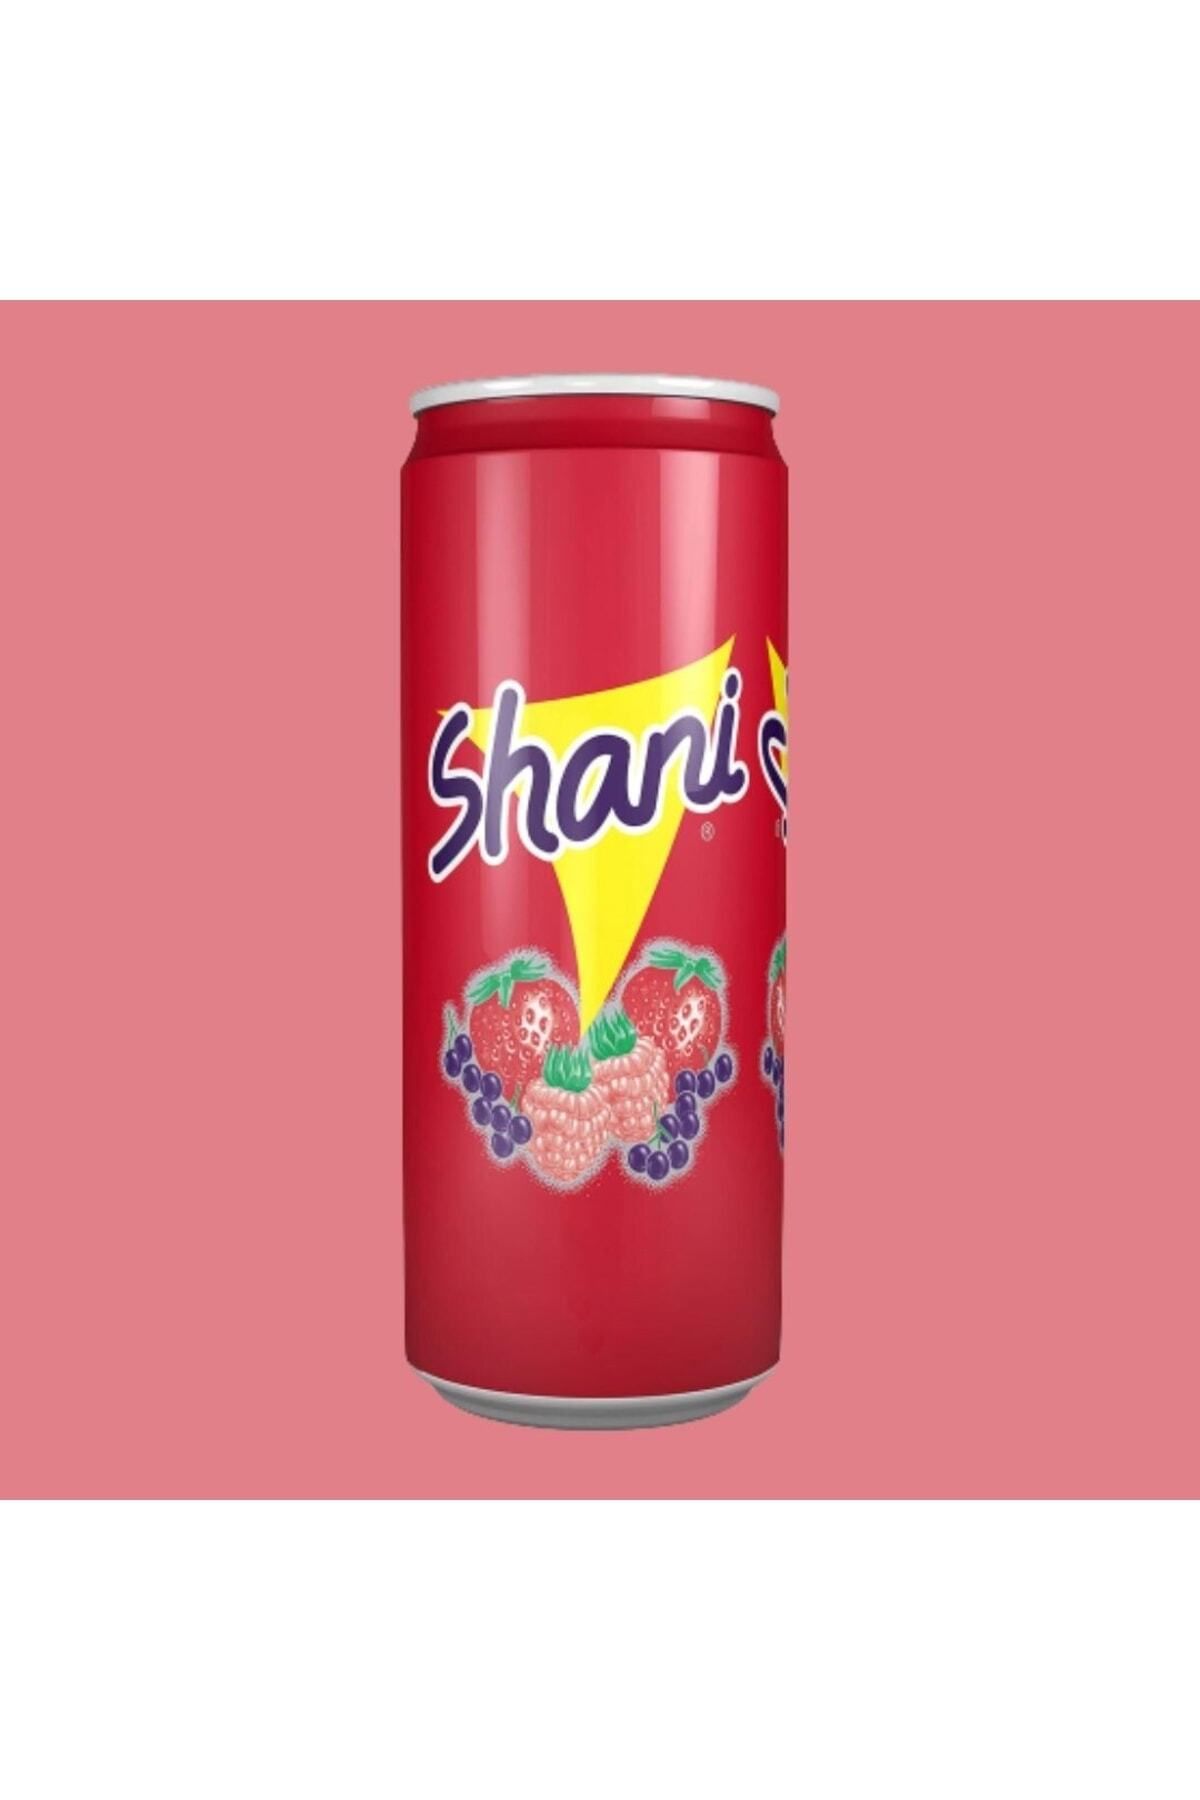 shani Fruit Flavored Drink 250ml